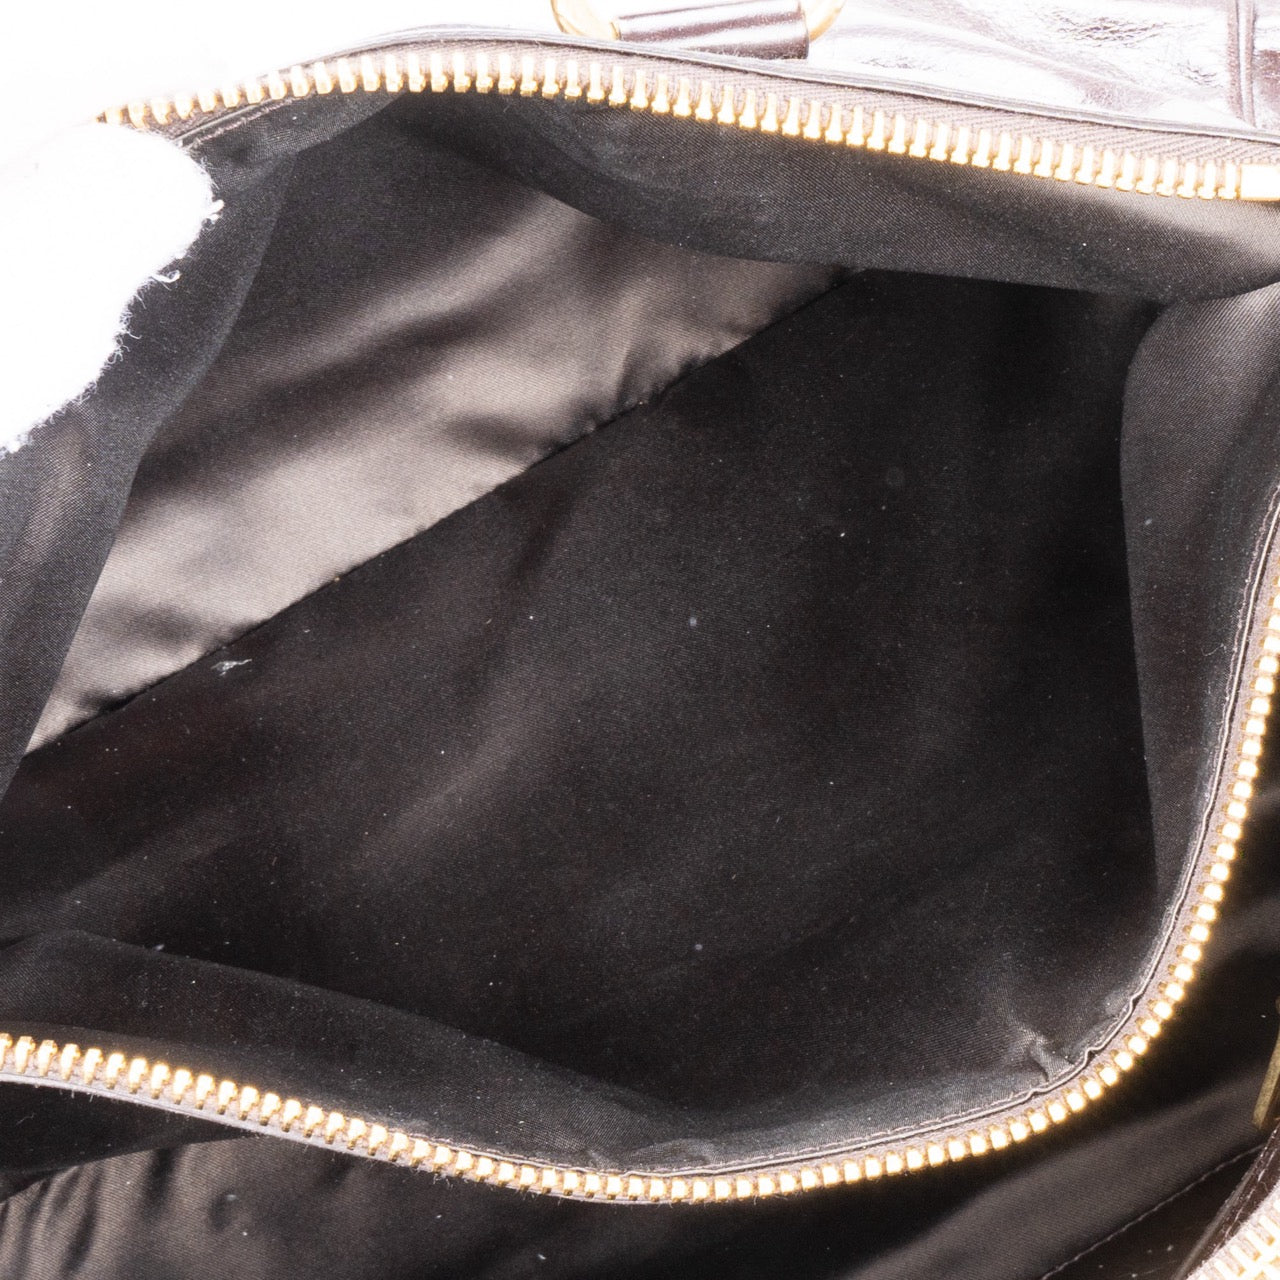 Miu Miu Brown Leather Vitello Handbag